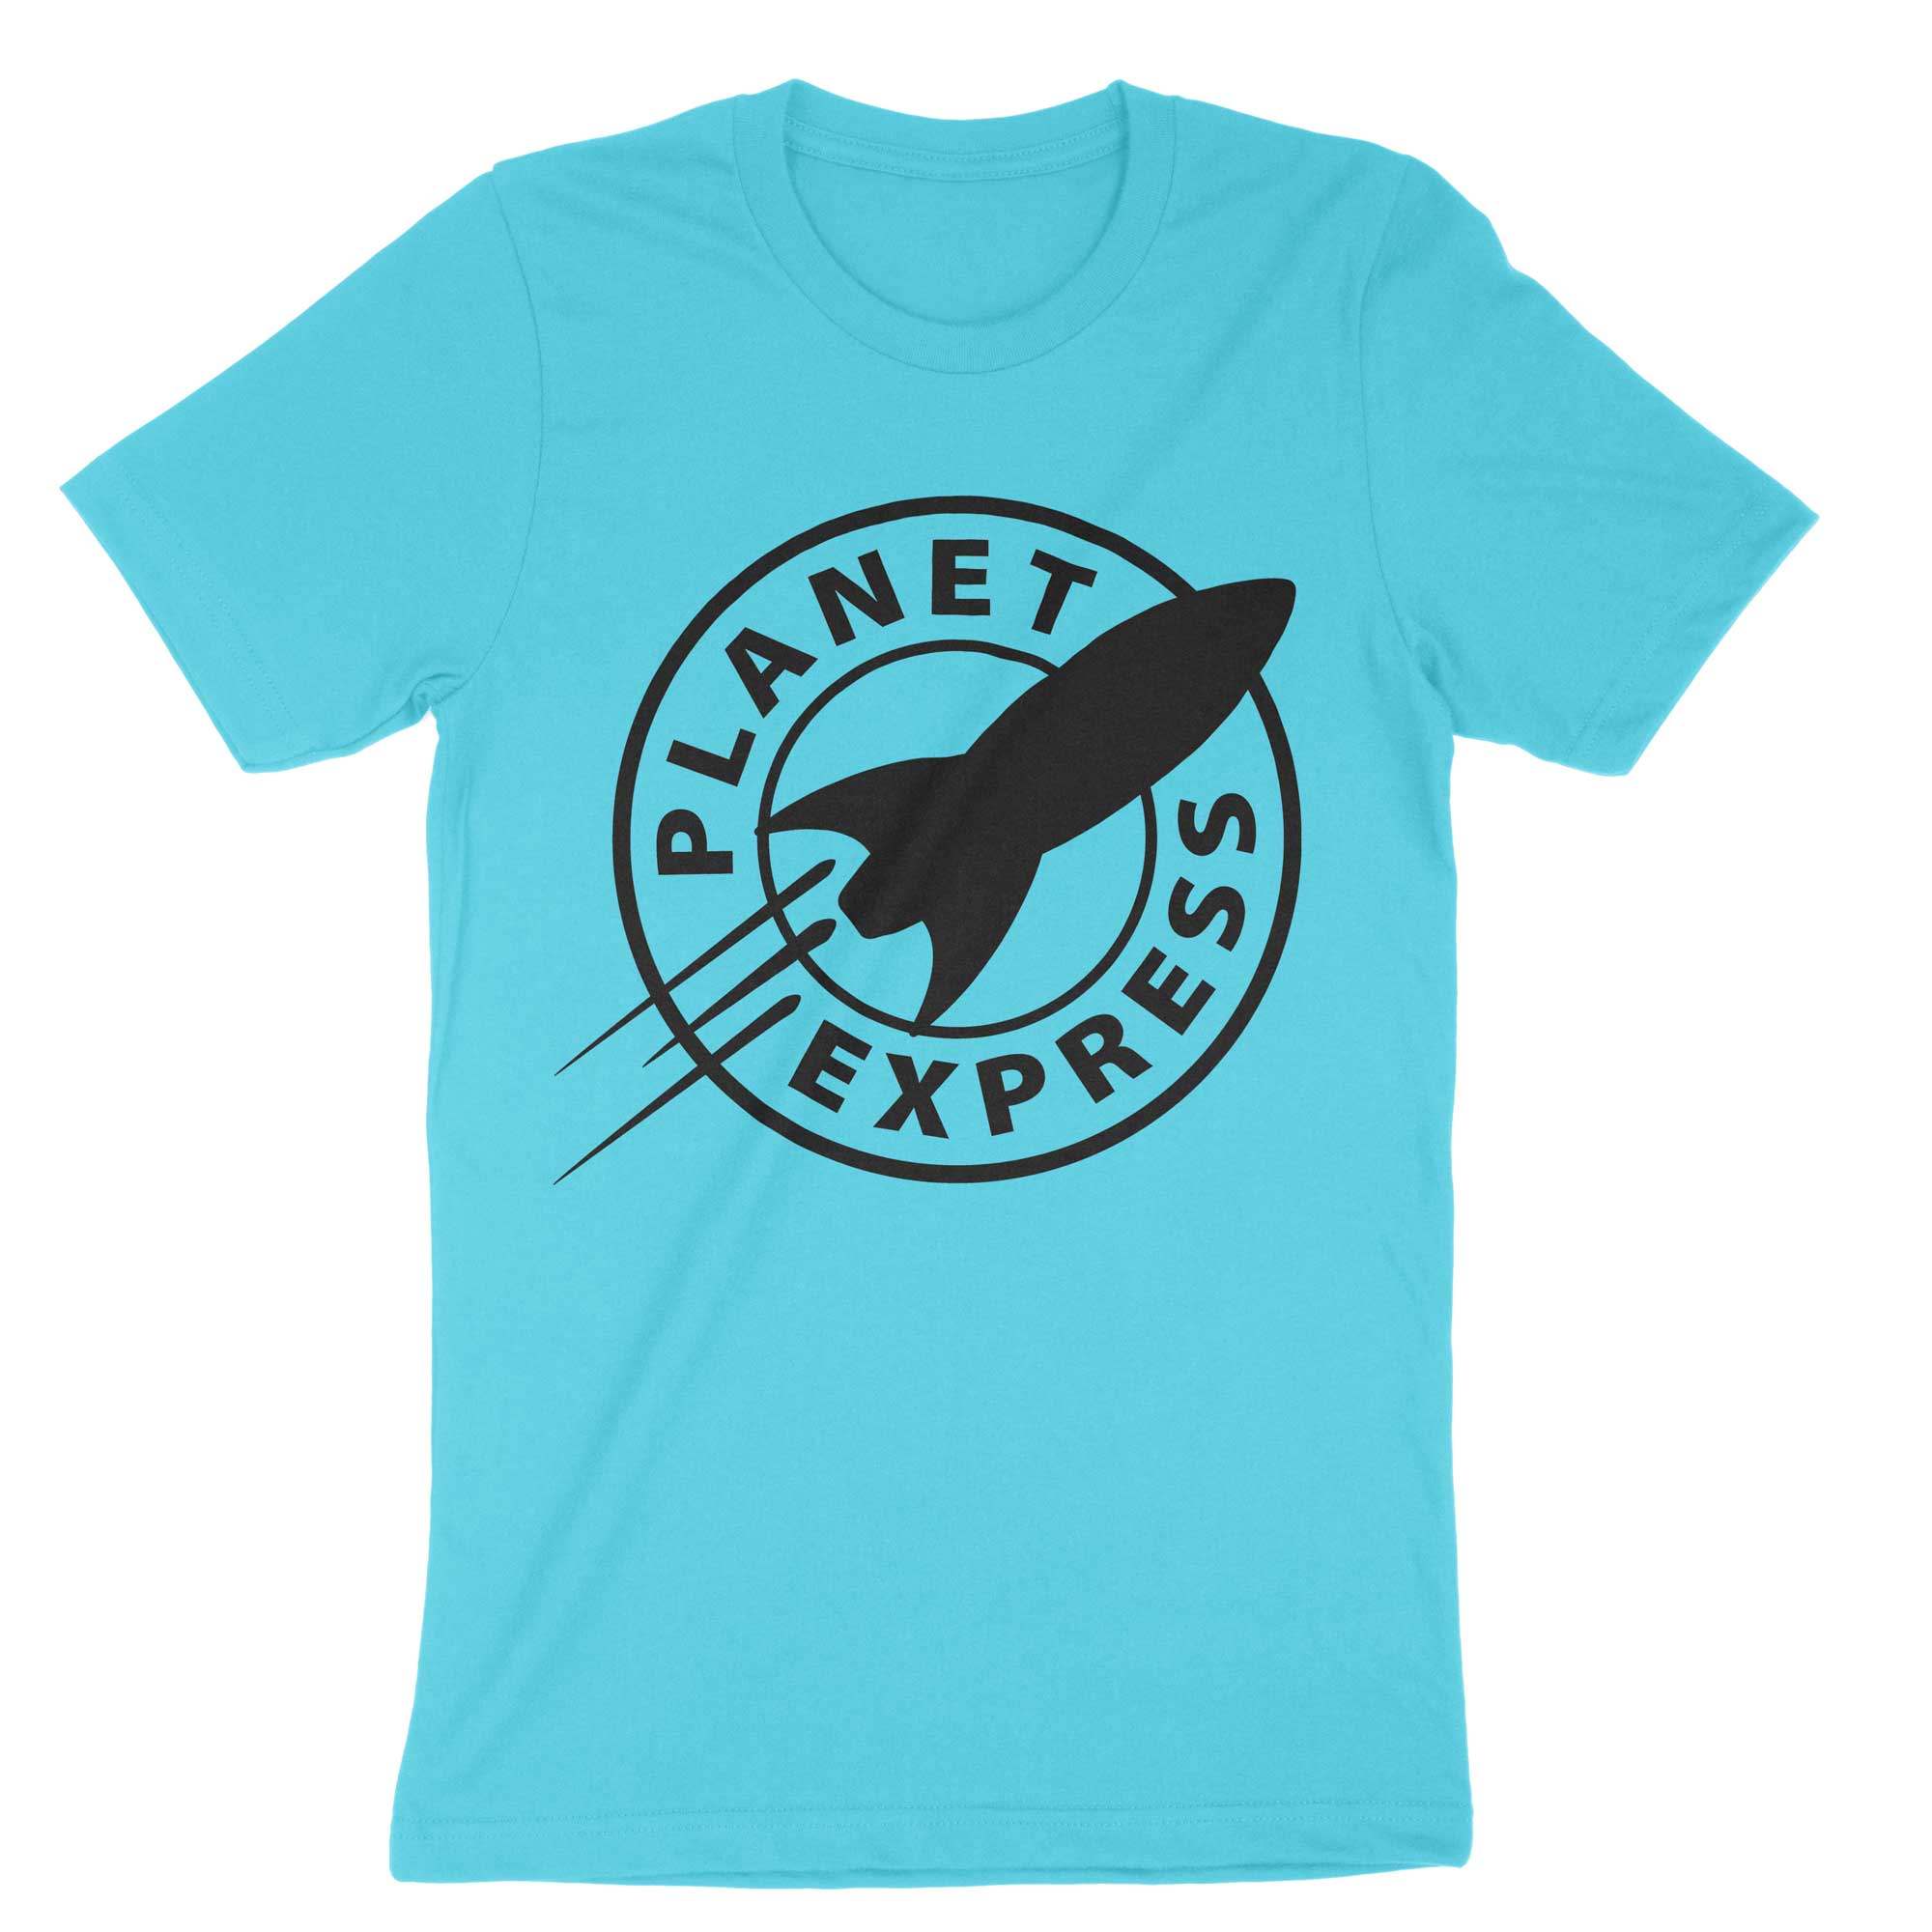 Planet Express Shirt-T-Shirts-Shirtasaurus-Premium-S-Turqoiuse-Shirtasaurus